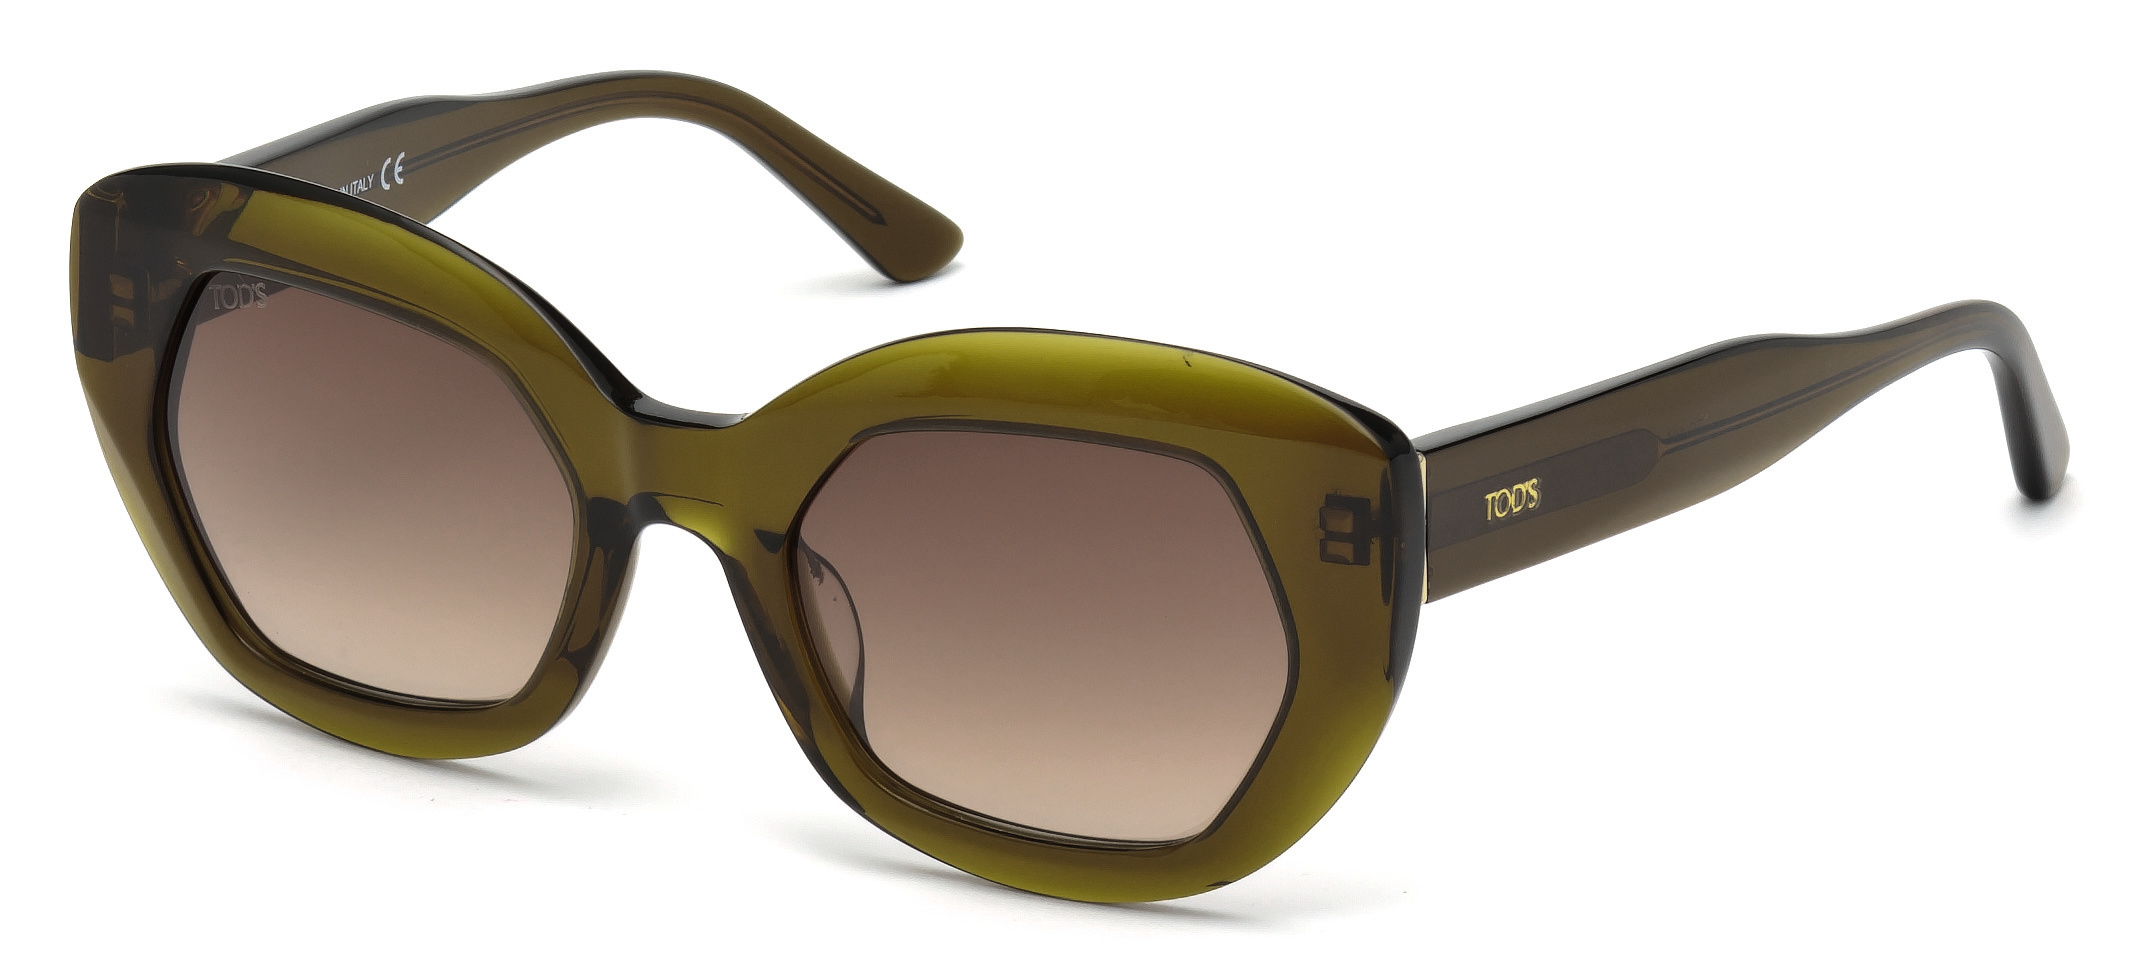 Marcolin Eyewear sunglasses Tods Eyewear FW 15 16 5